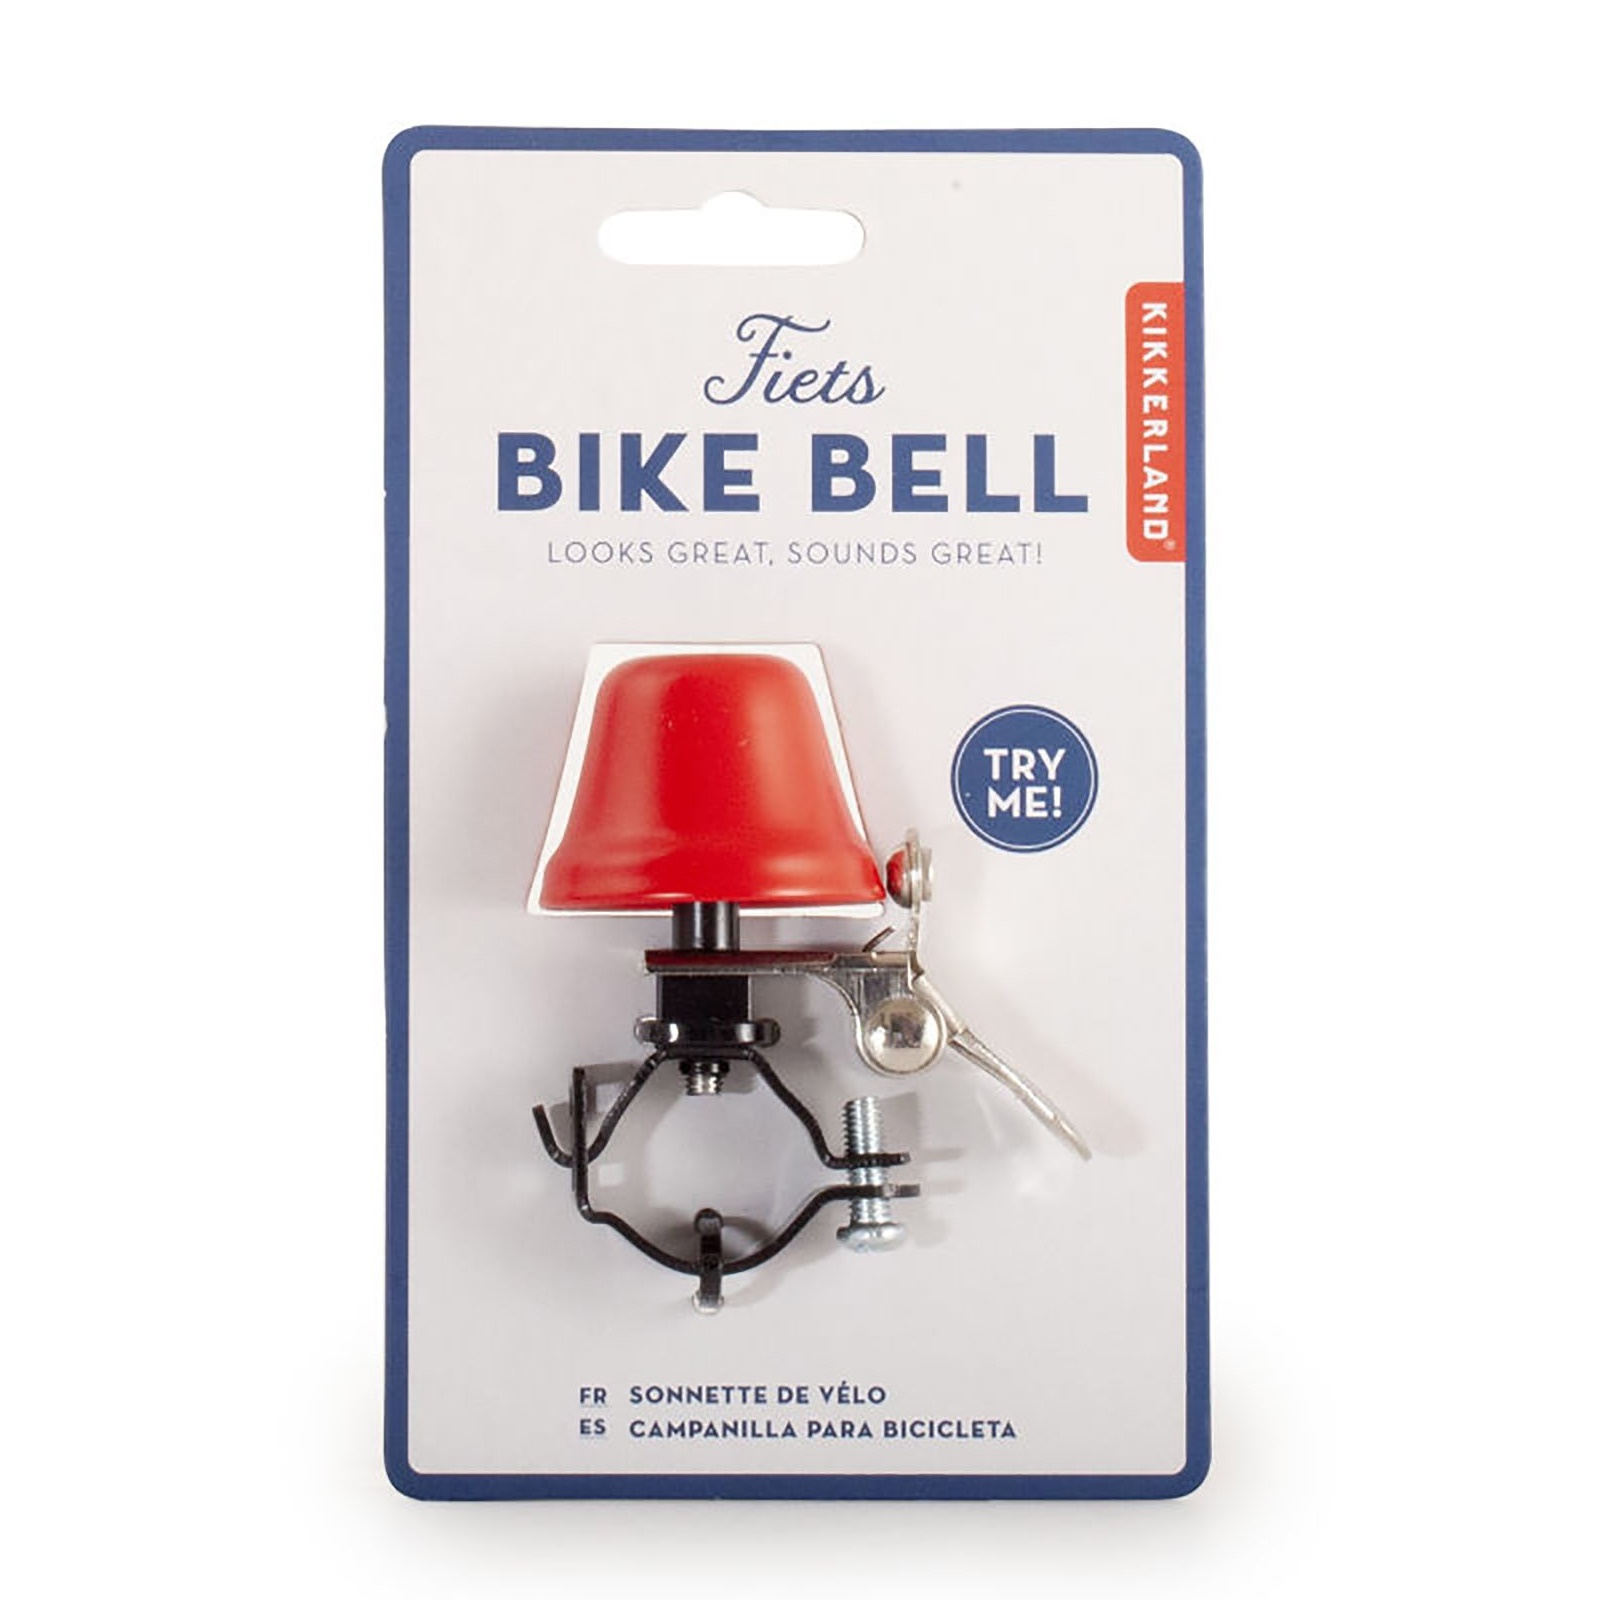 Bike bell red